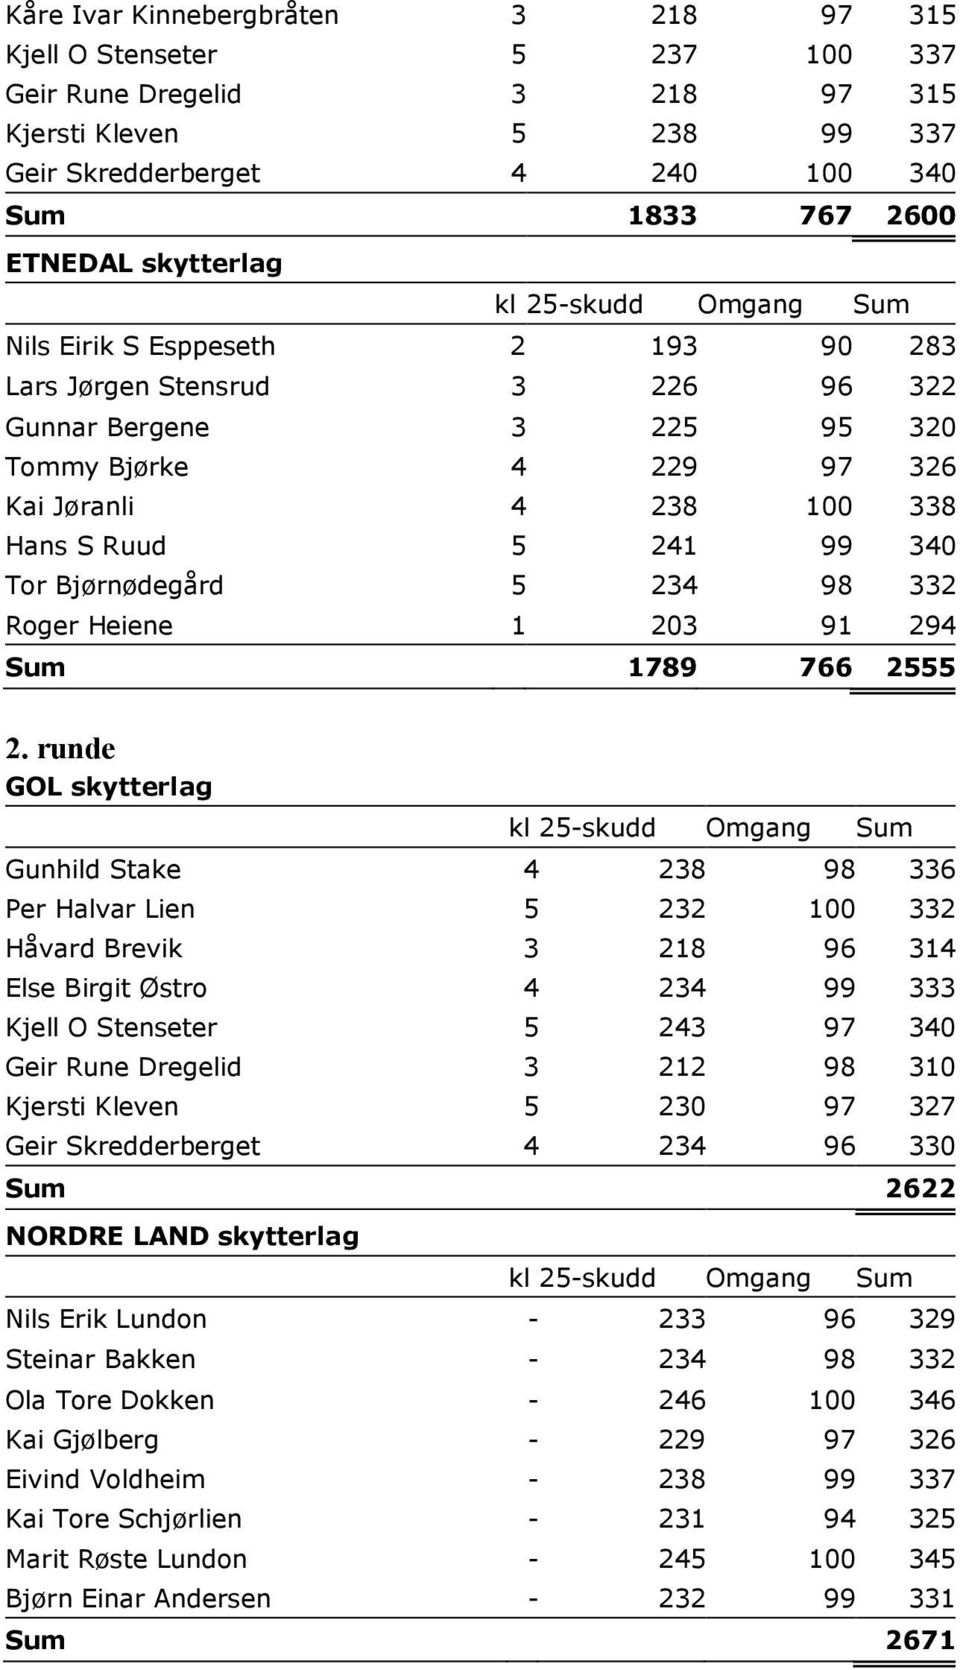 241 99 340 Tor Bjørnødegård 5 234 98 332 Roger Heiene 1 203 91 294 Sum 1789 766 2555 2.